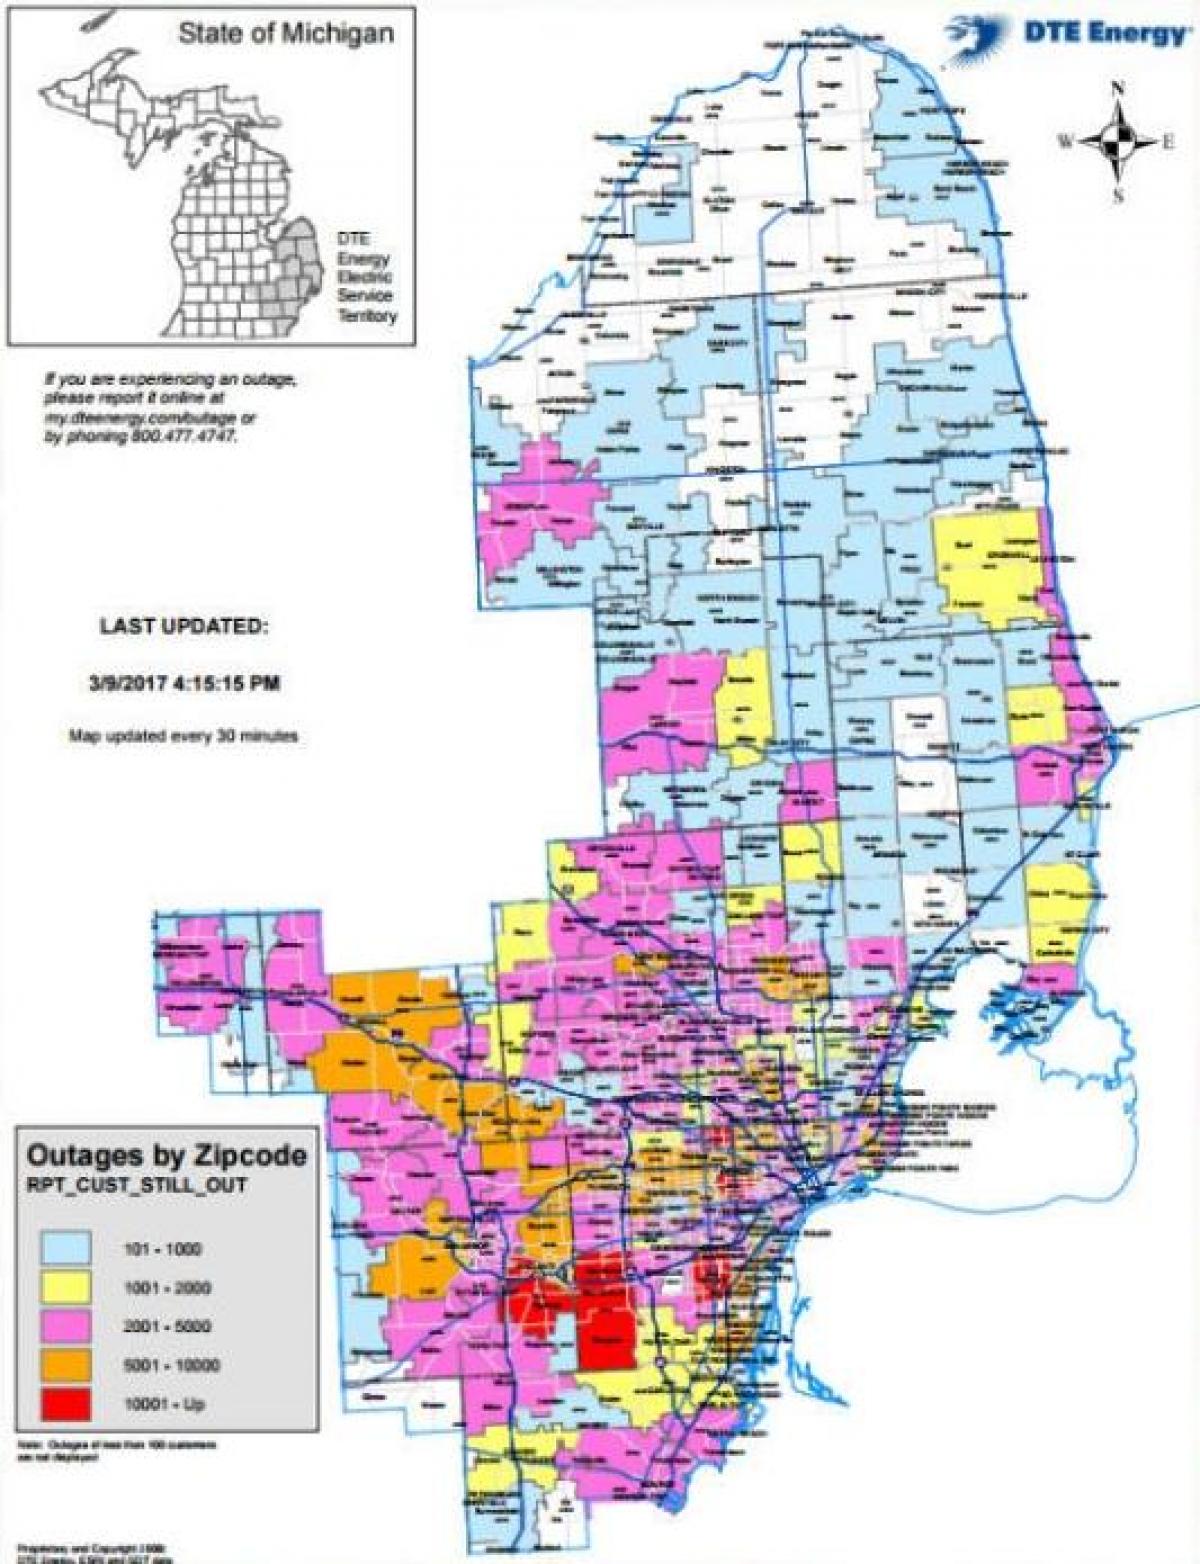 Detroit edison queda de energia mapa